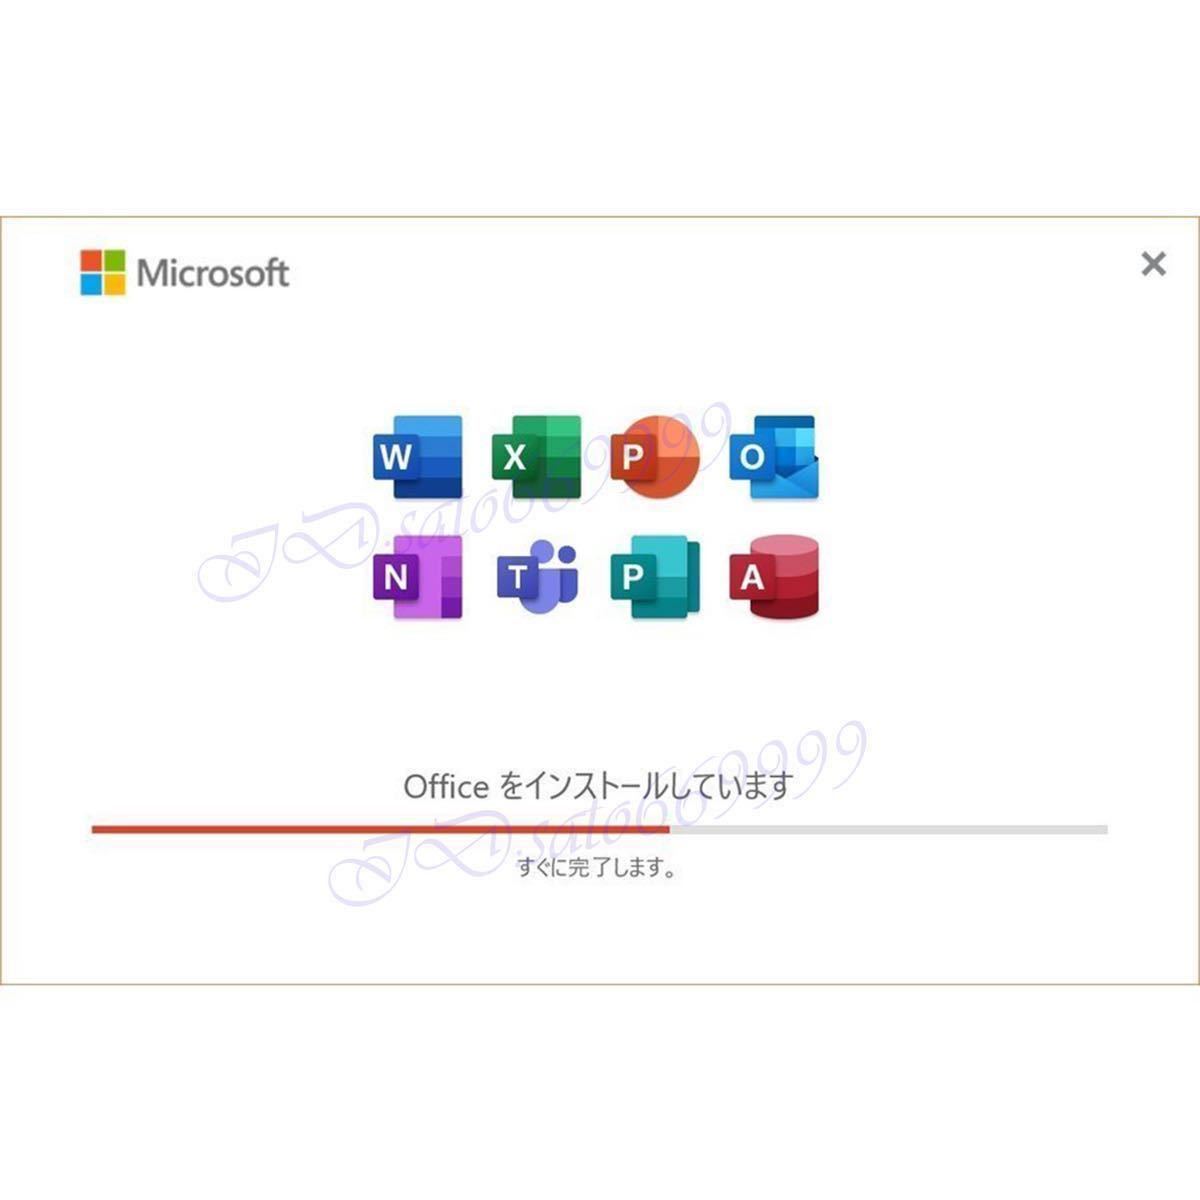 Microsoft Office 2021 Professional Plus 正規 プロダクトキー 32/64bit対応 Access Word Excel PowerPoint 認証保証 日本語 永続版の画像3